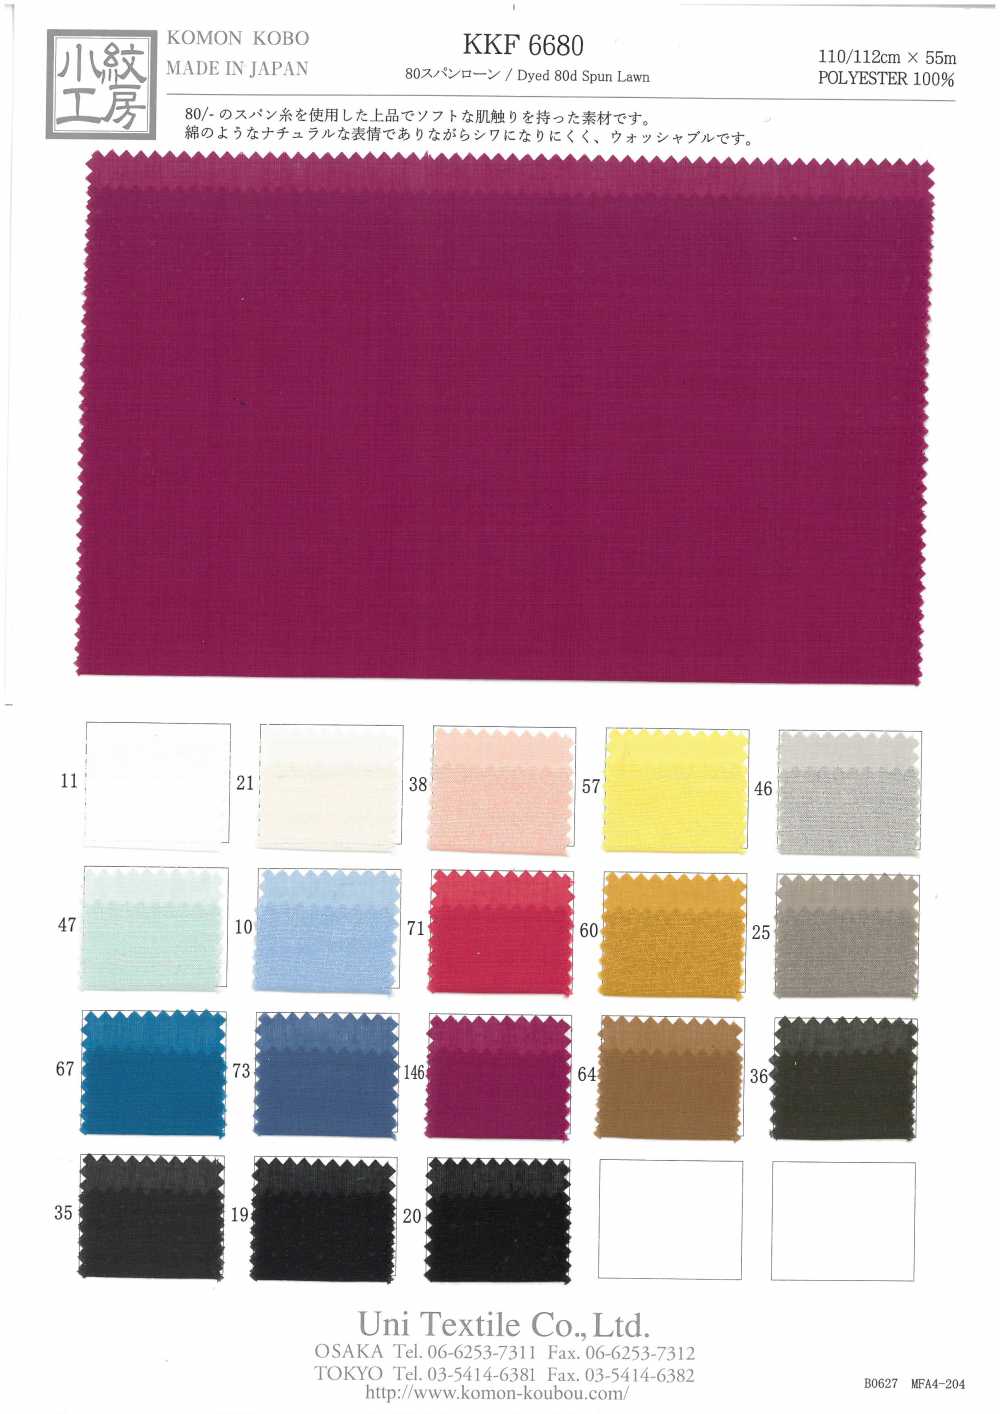 KKF6680 80 Gesponnener Rasen[Textilgewebe] Uni Textile